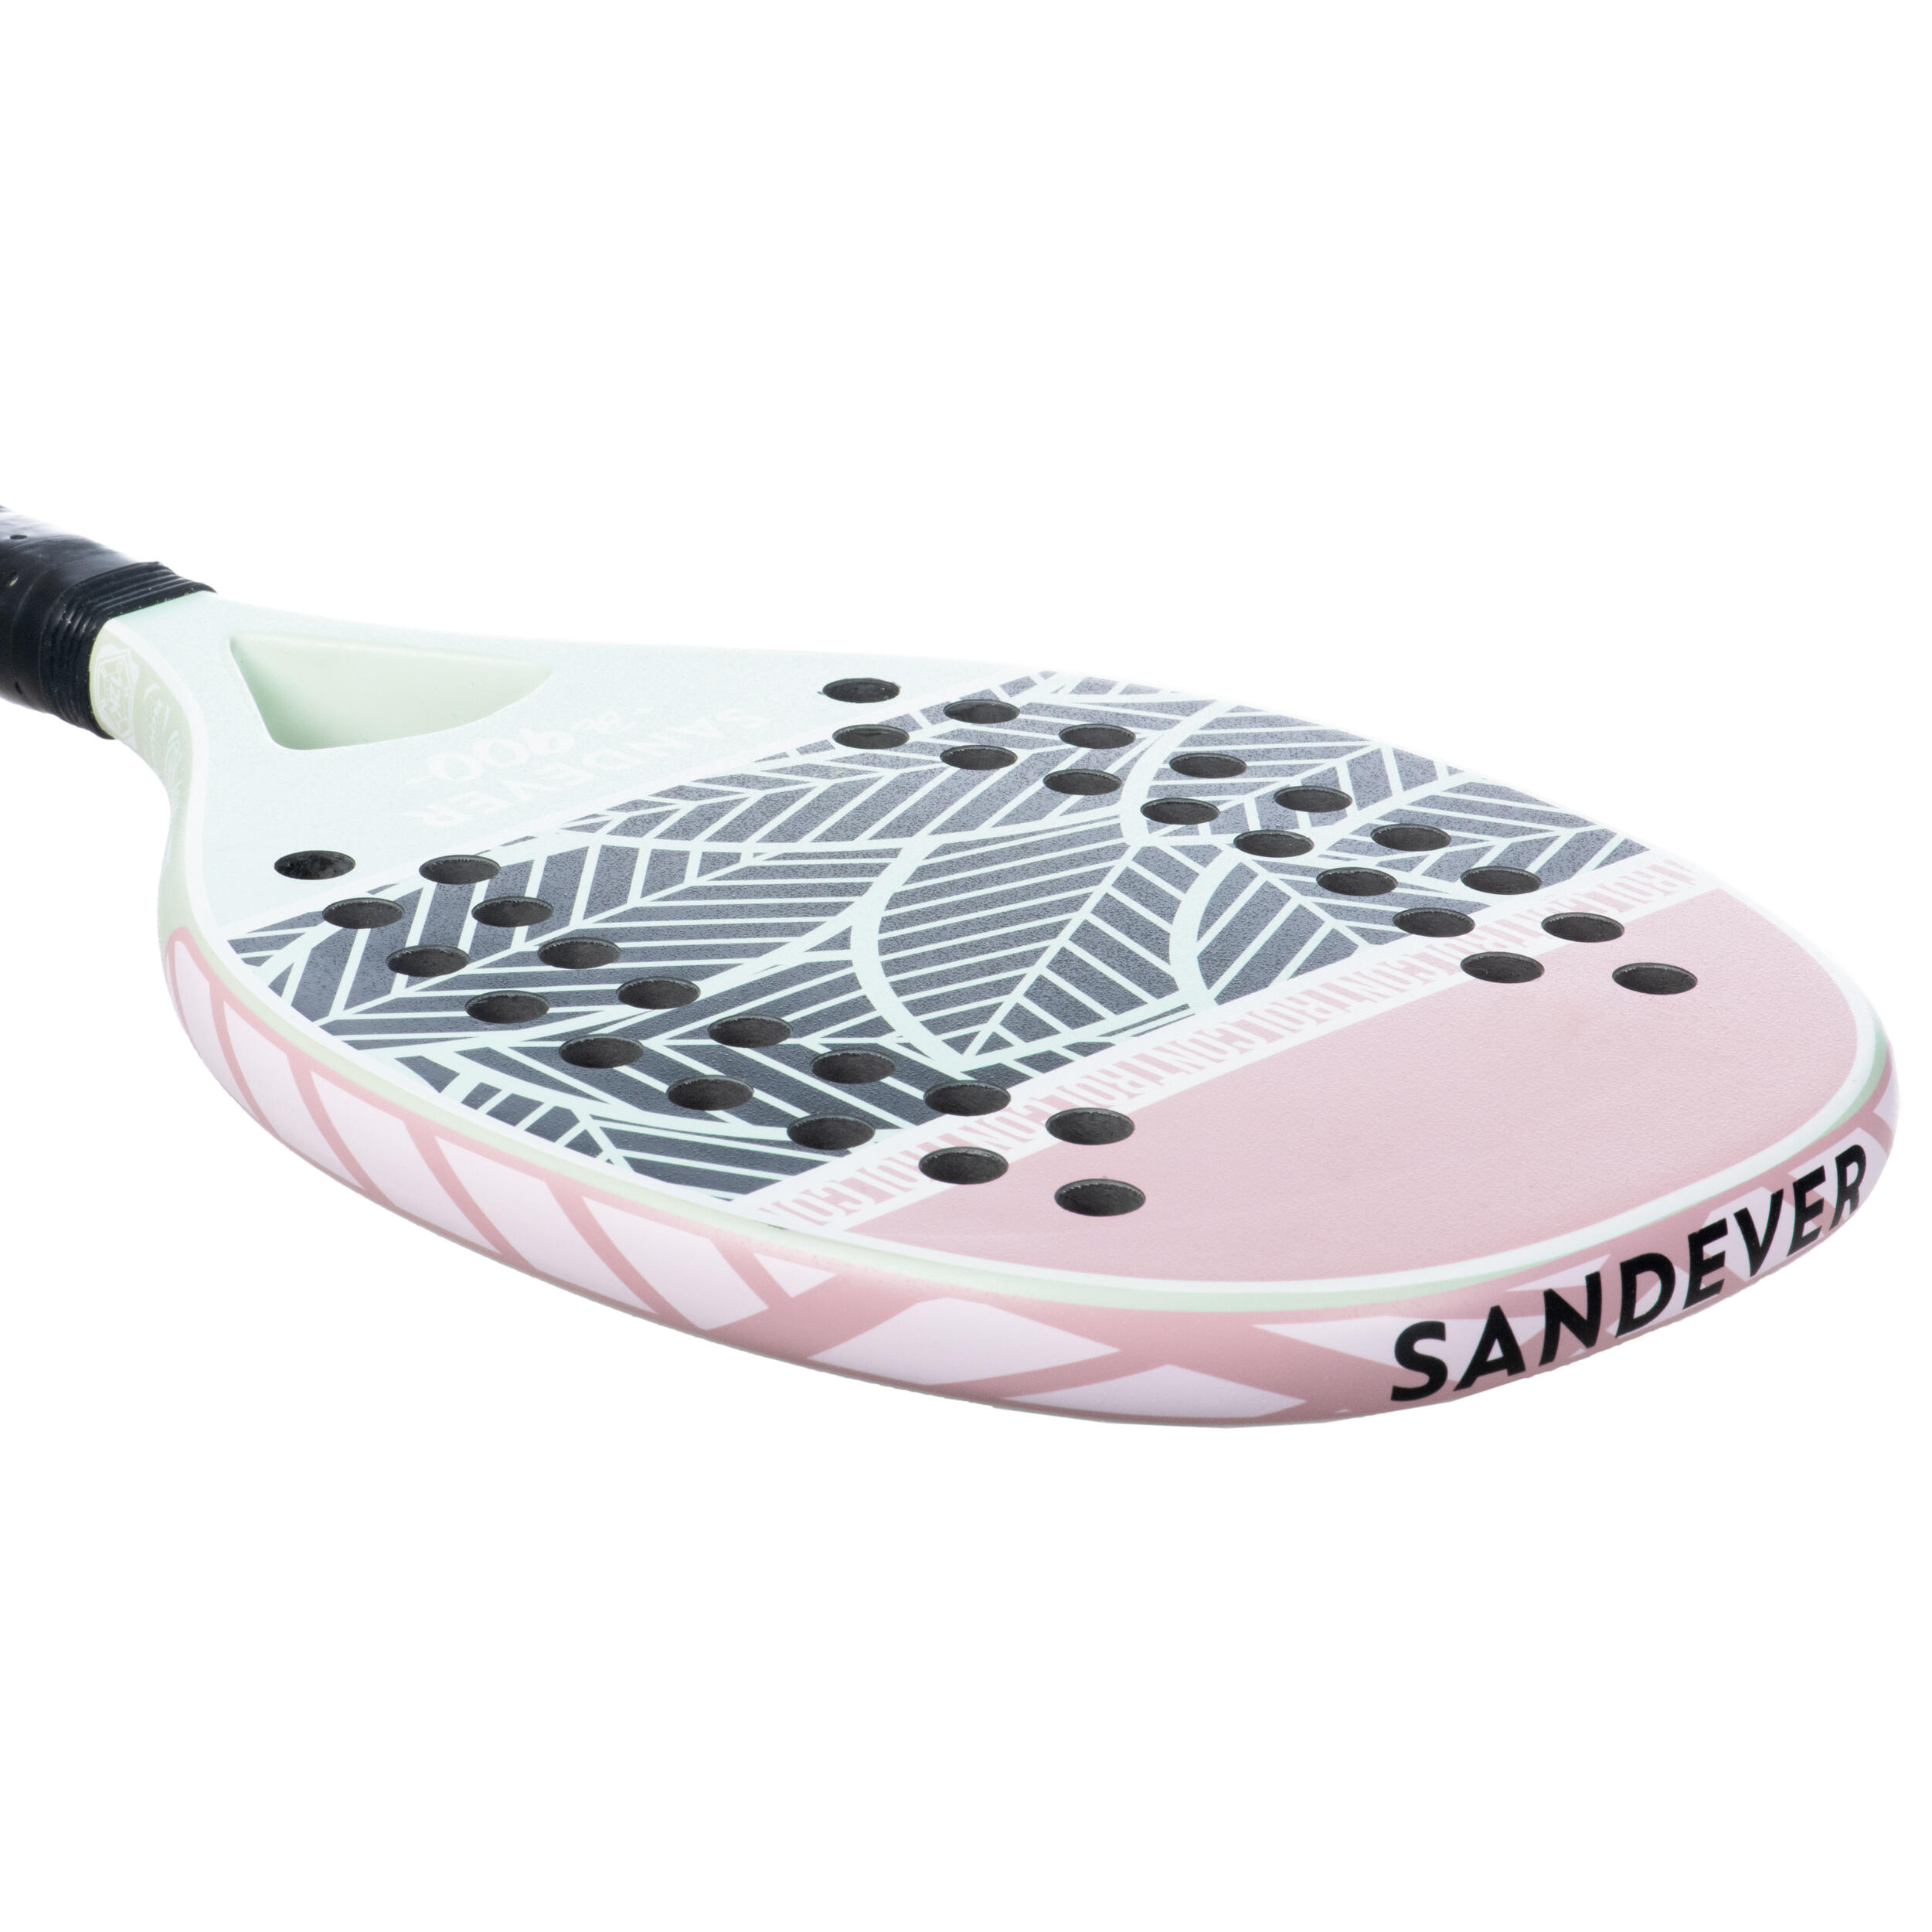 SANDEVER Beach Tennis Racket BTR 900 Control B